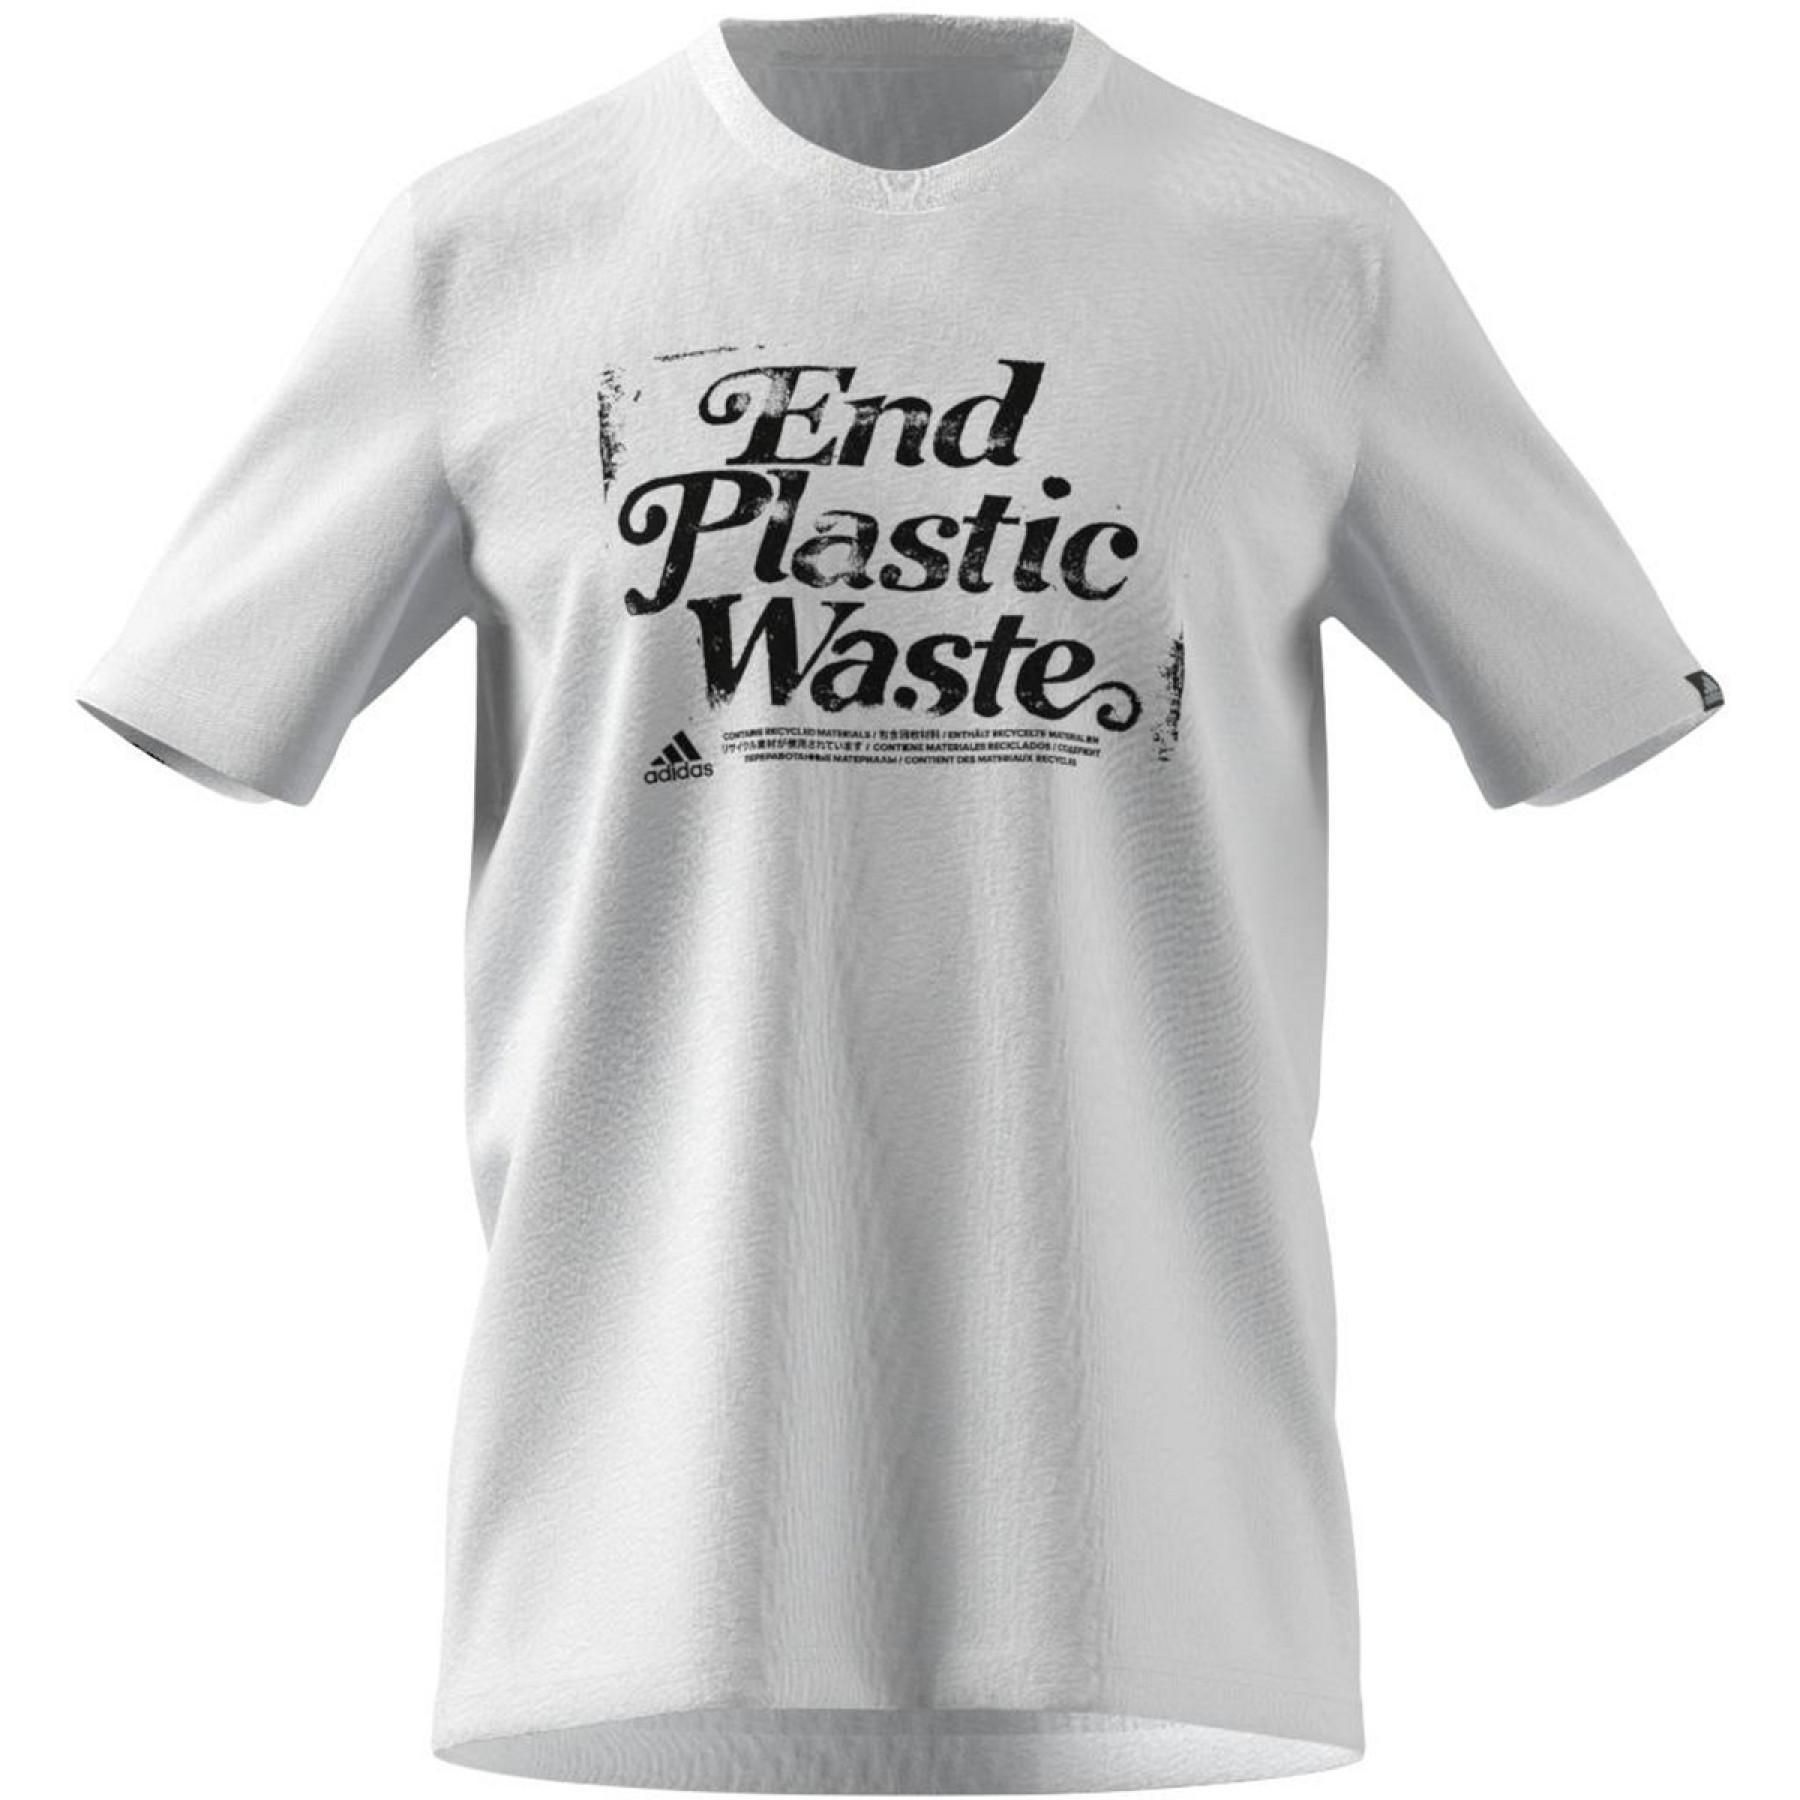 Maglietta adidas Slogan Recycled Cotton Graphic